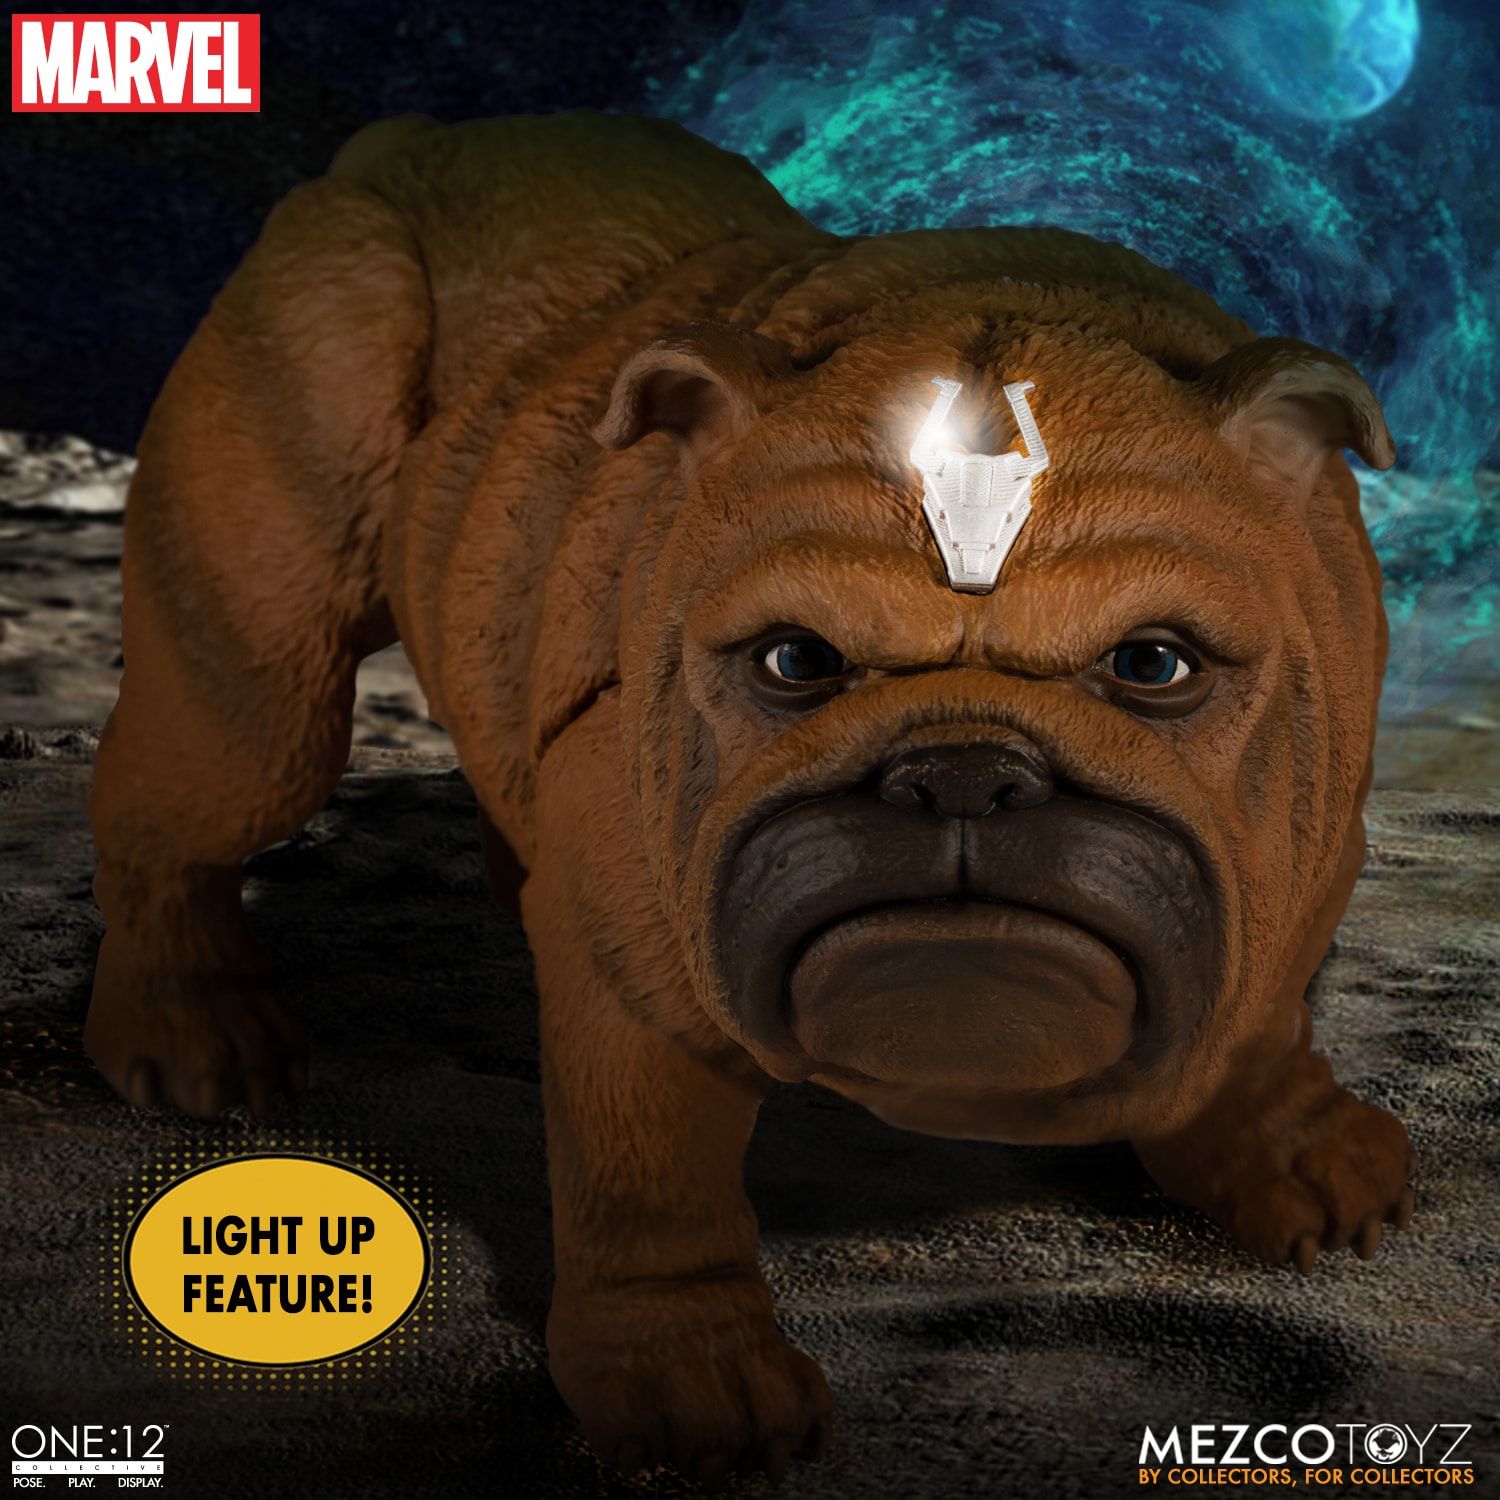 Mezco - One:12 Collective - Marvel - Black Bolt & Lockjaw - Marvelous Toys